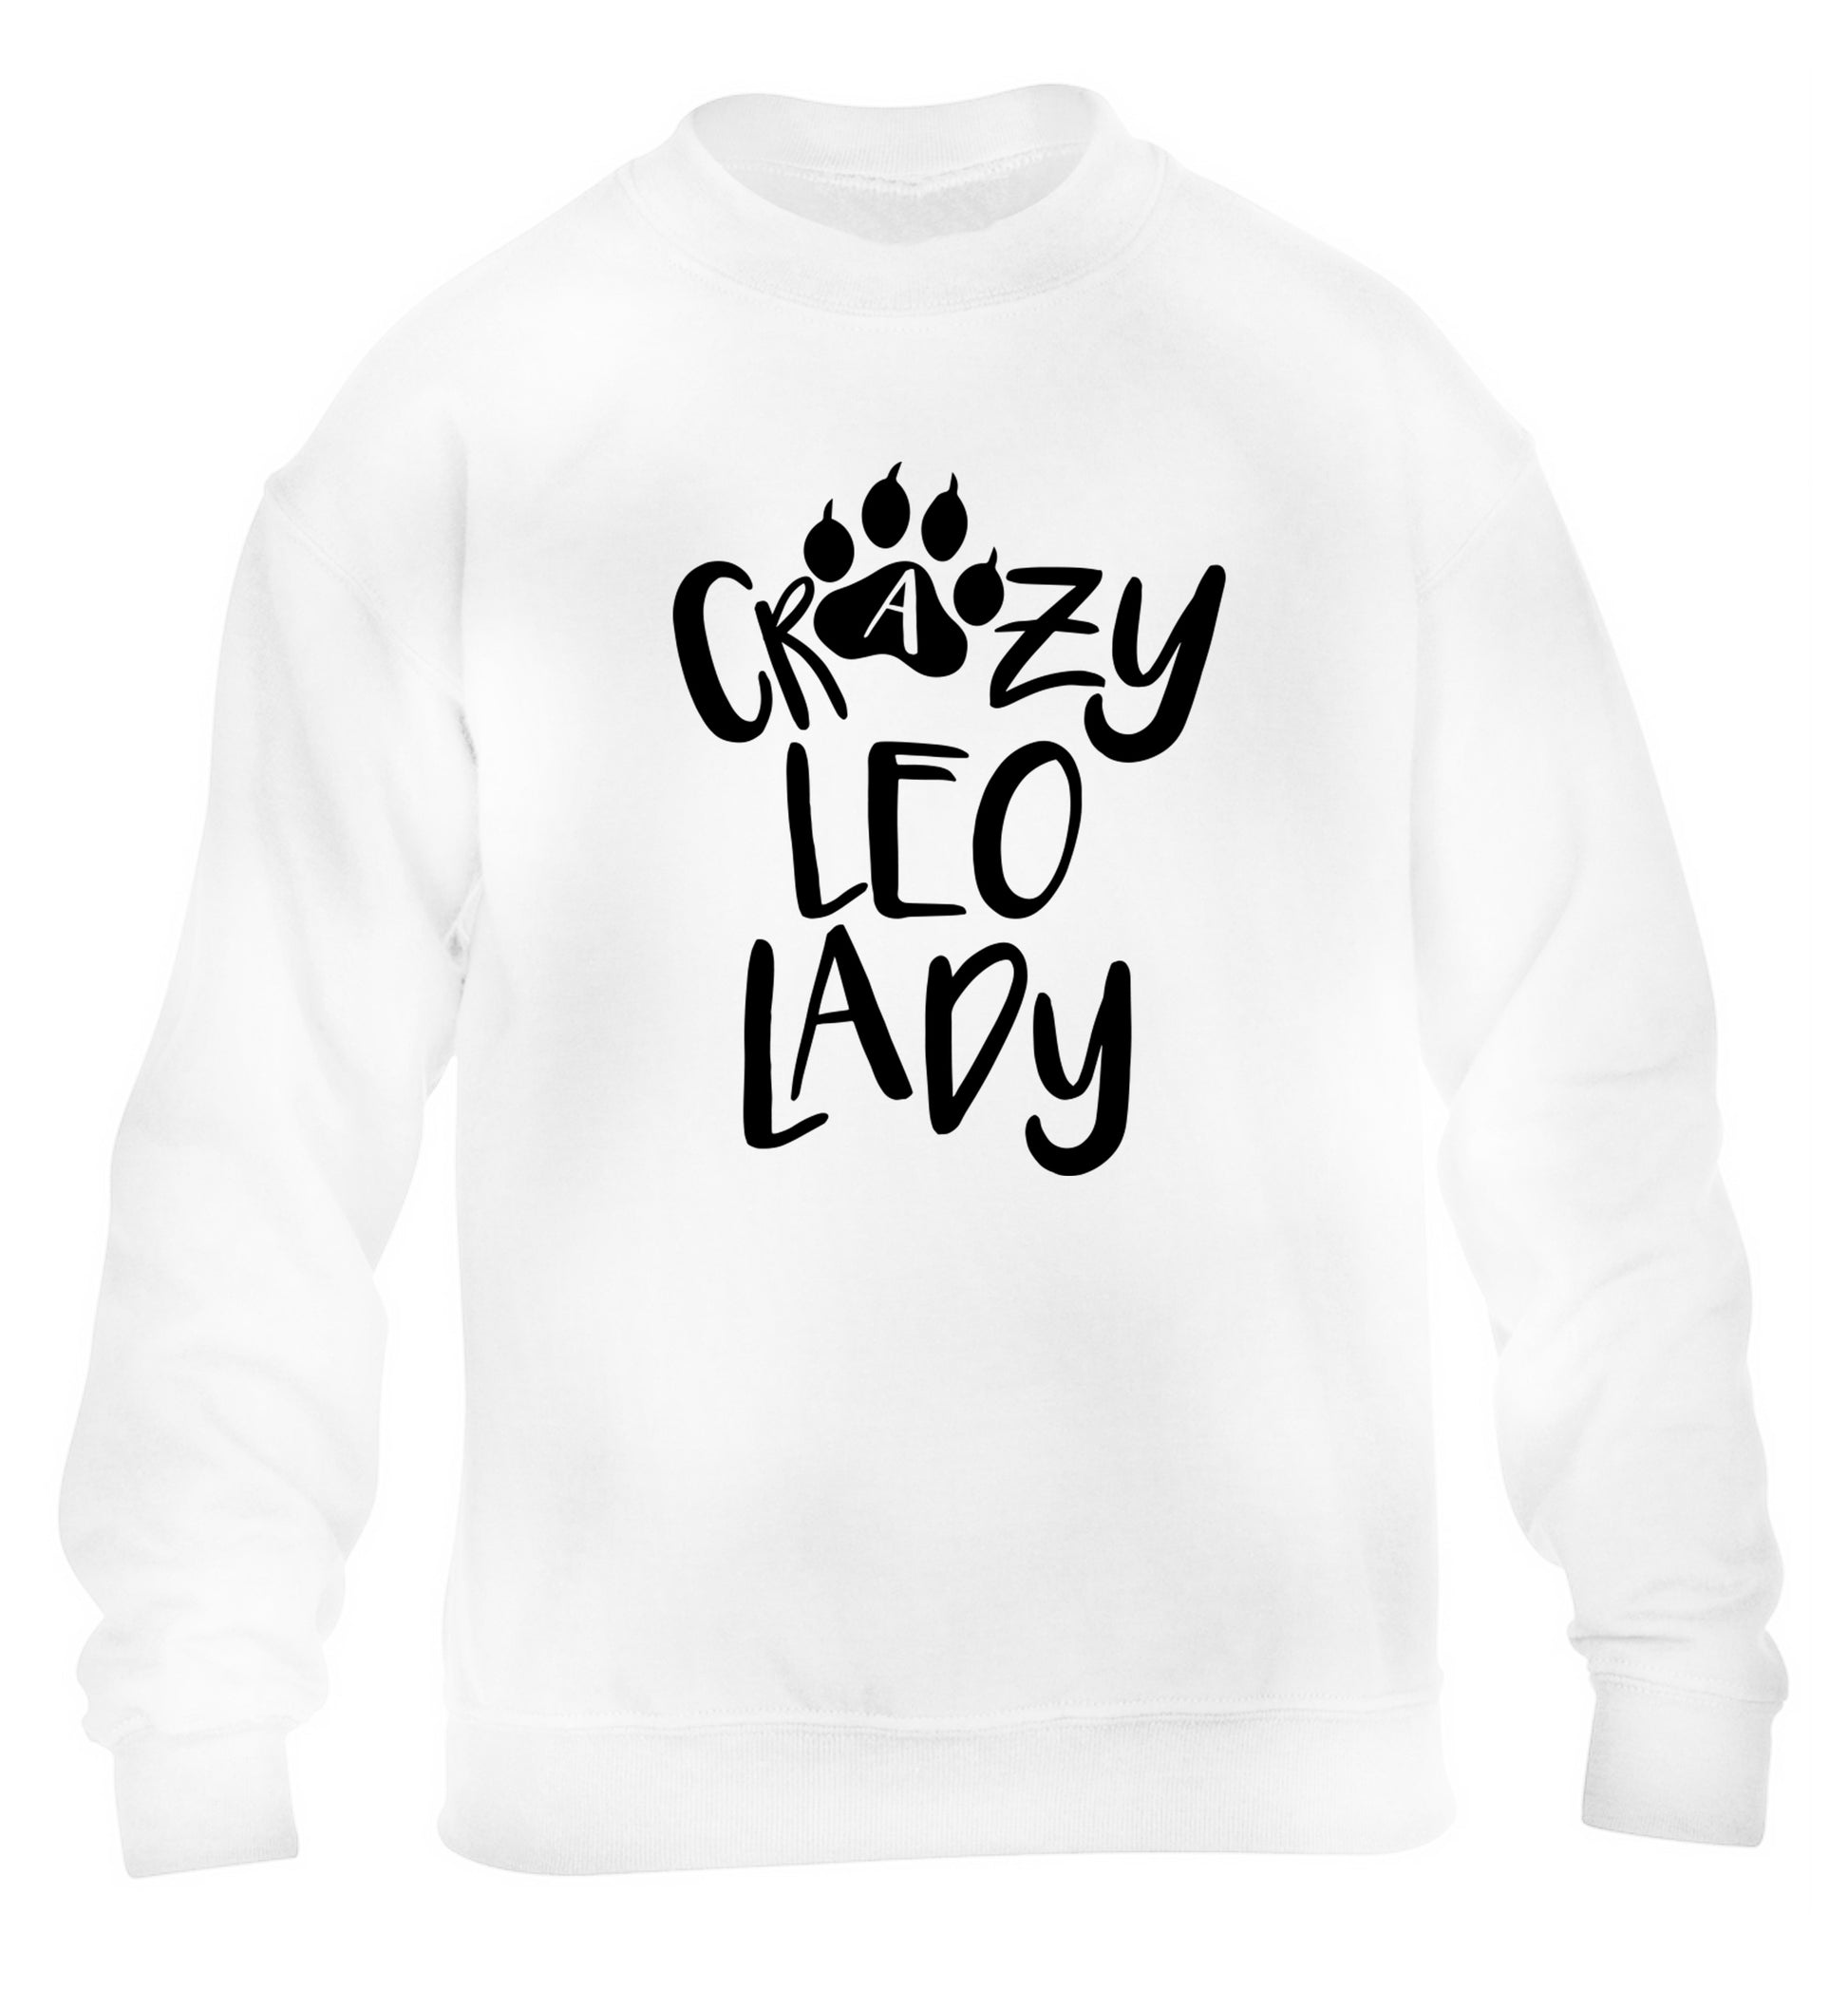 Crazy leo lady children's white sweater 12-13 Years